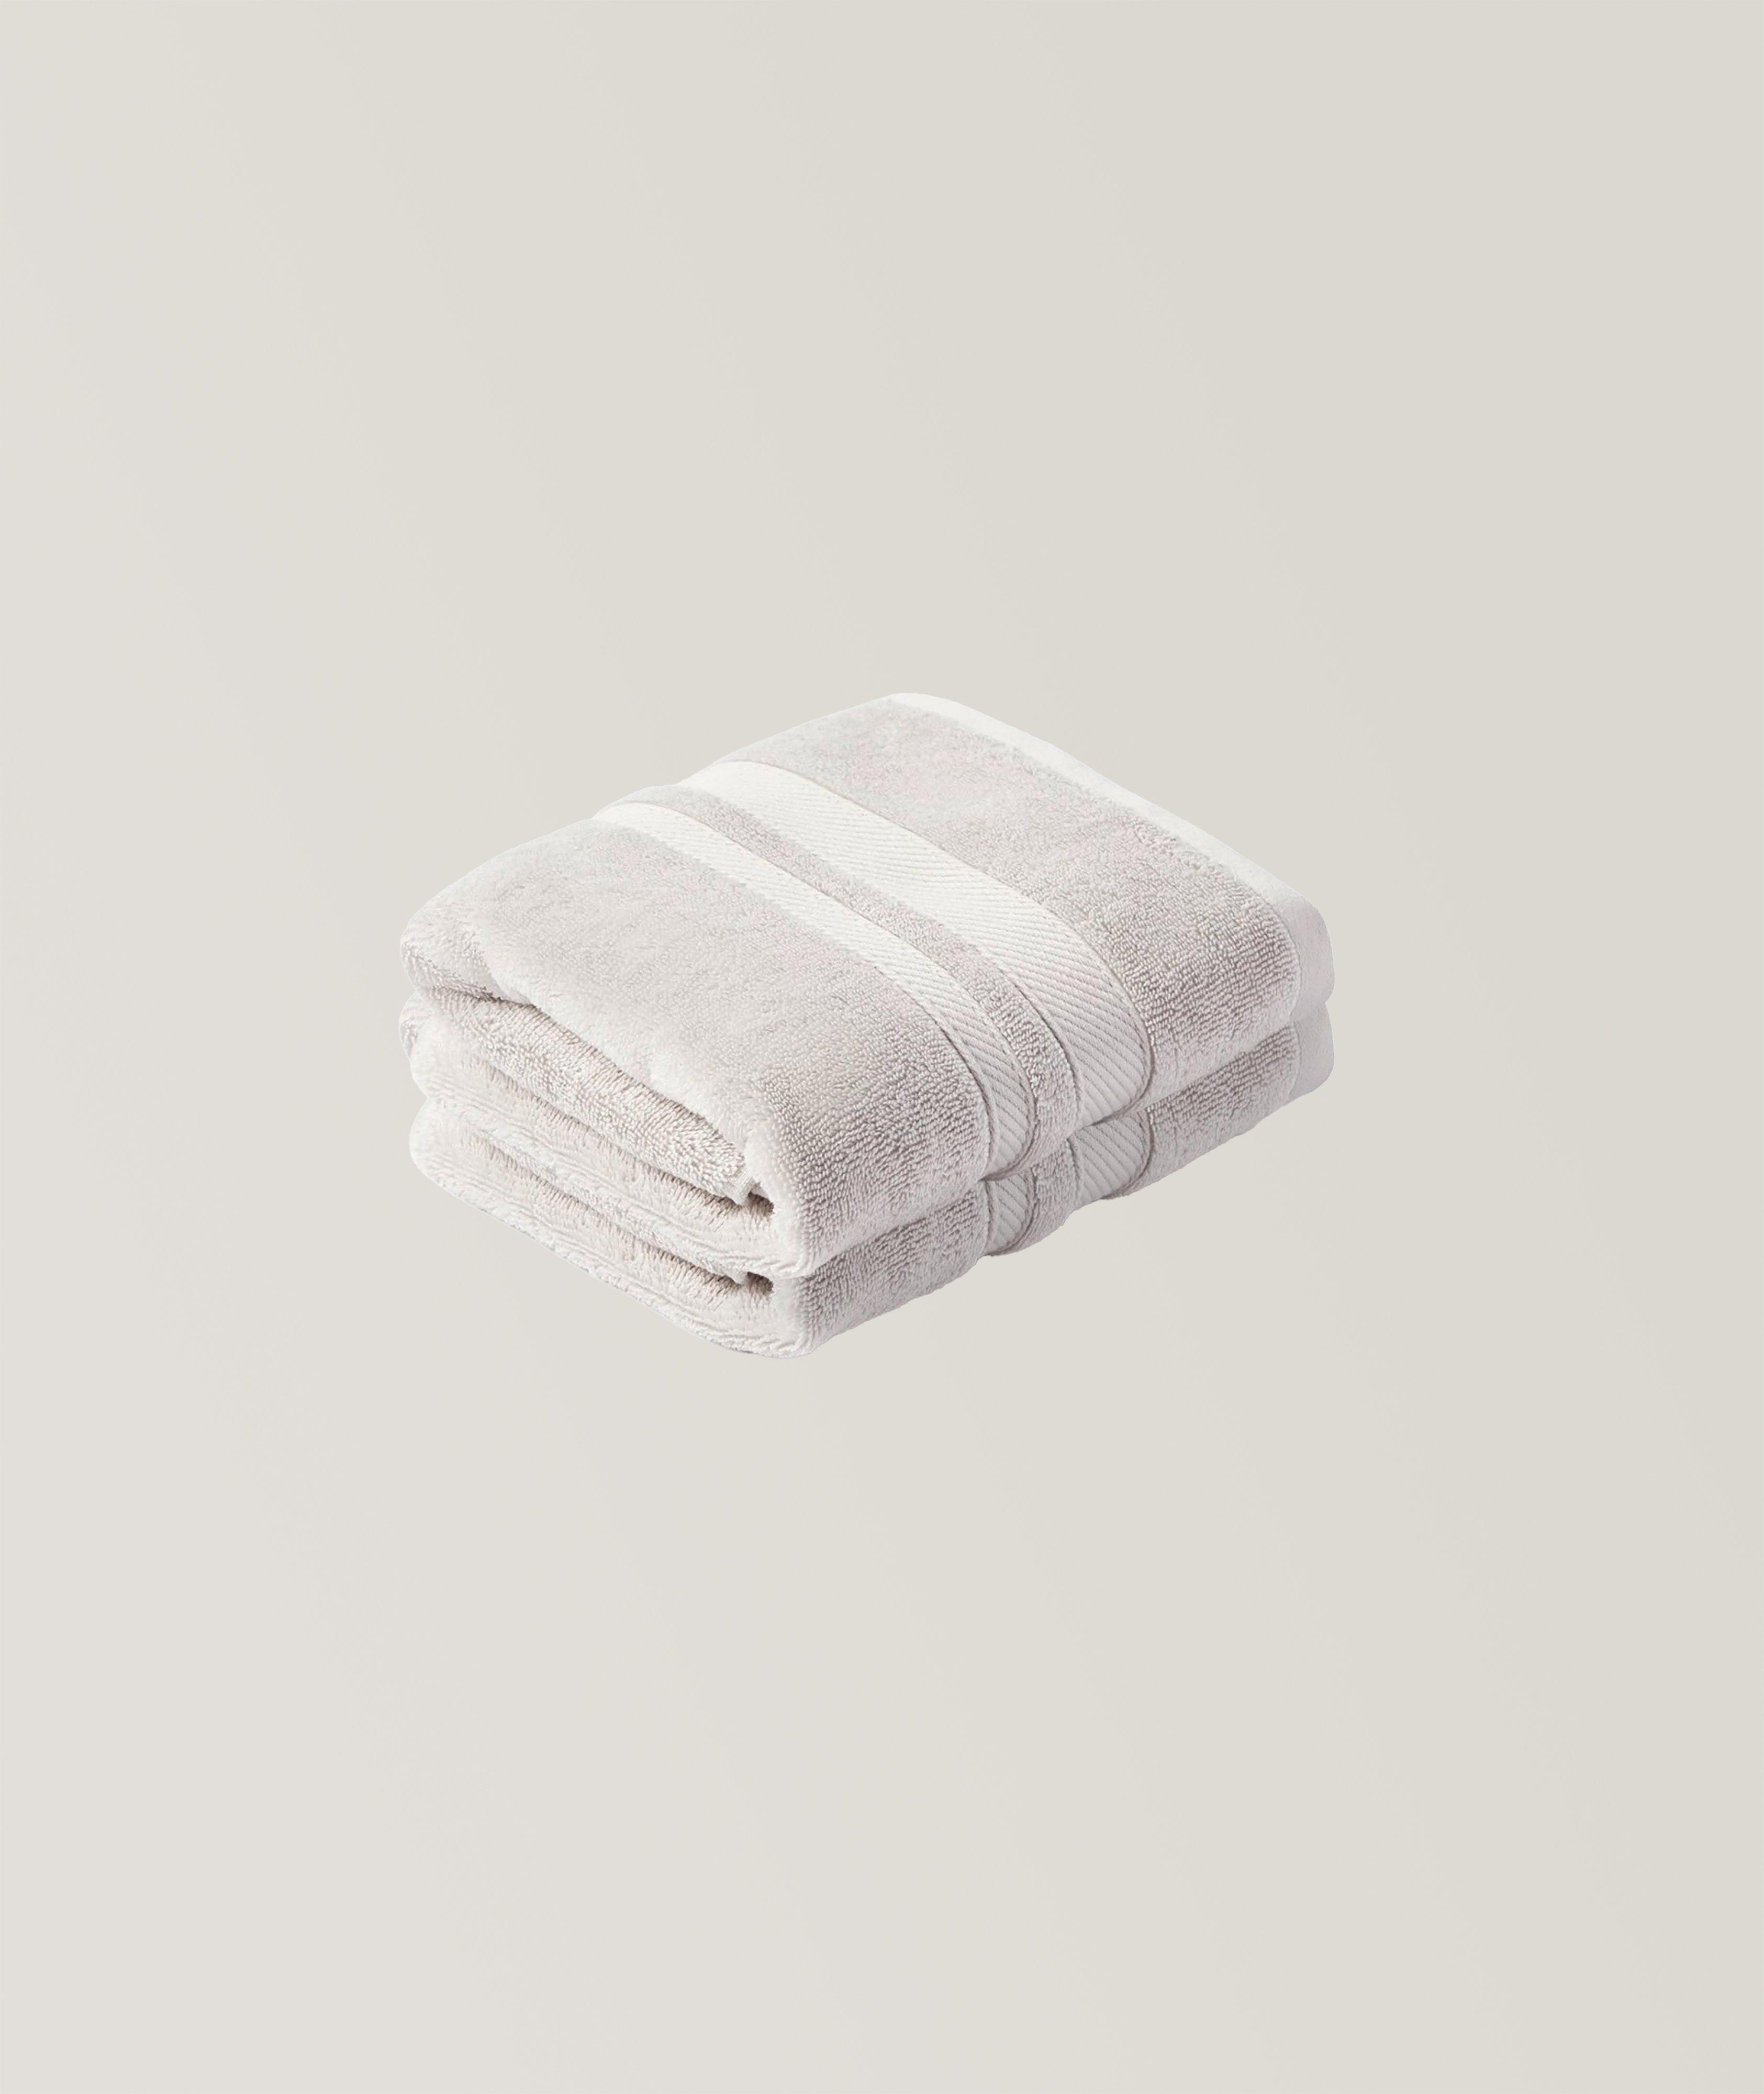 Hand Towel Pair image 0